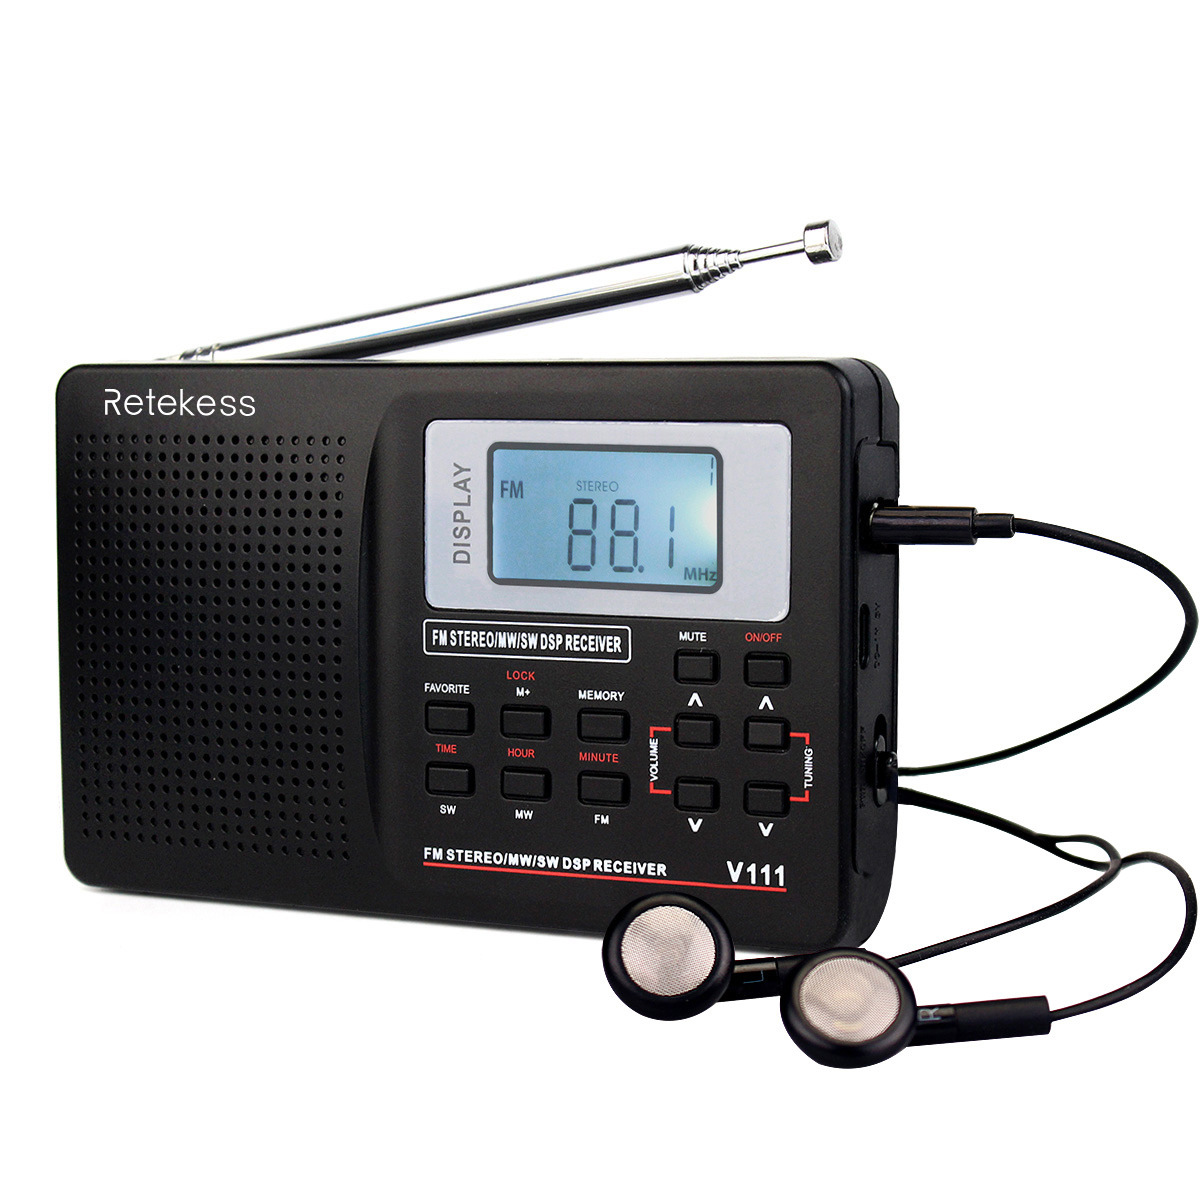 Retekess-V-111-Full-Band-Radio-FM-MW-SW-Stereo-Radio-Station-Receiver-Portable-Clock-Alarm-1897128-3